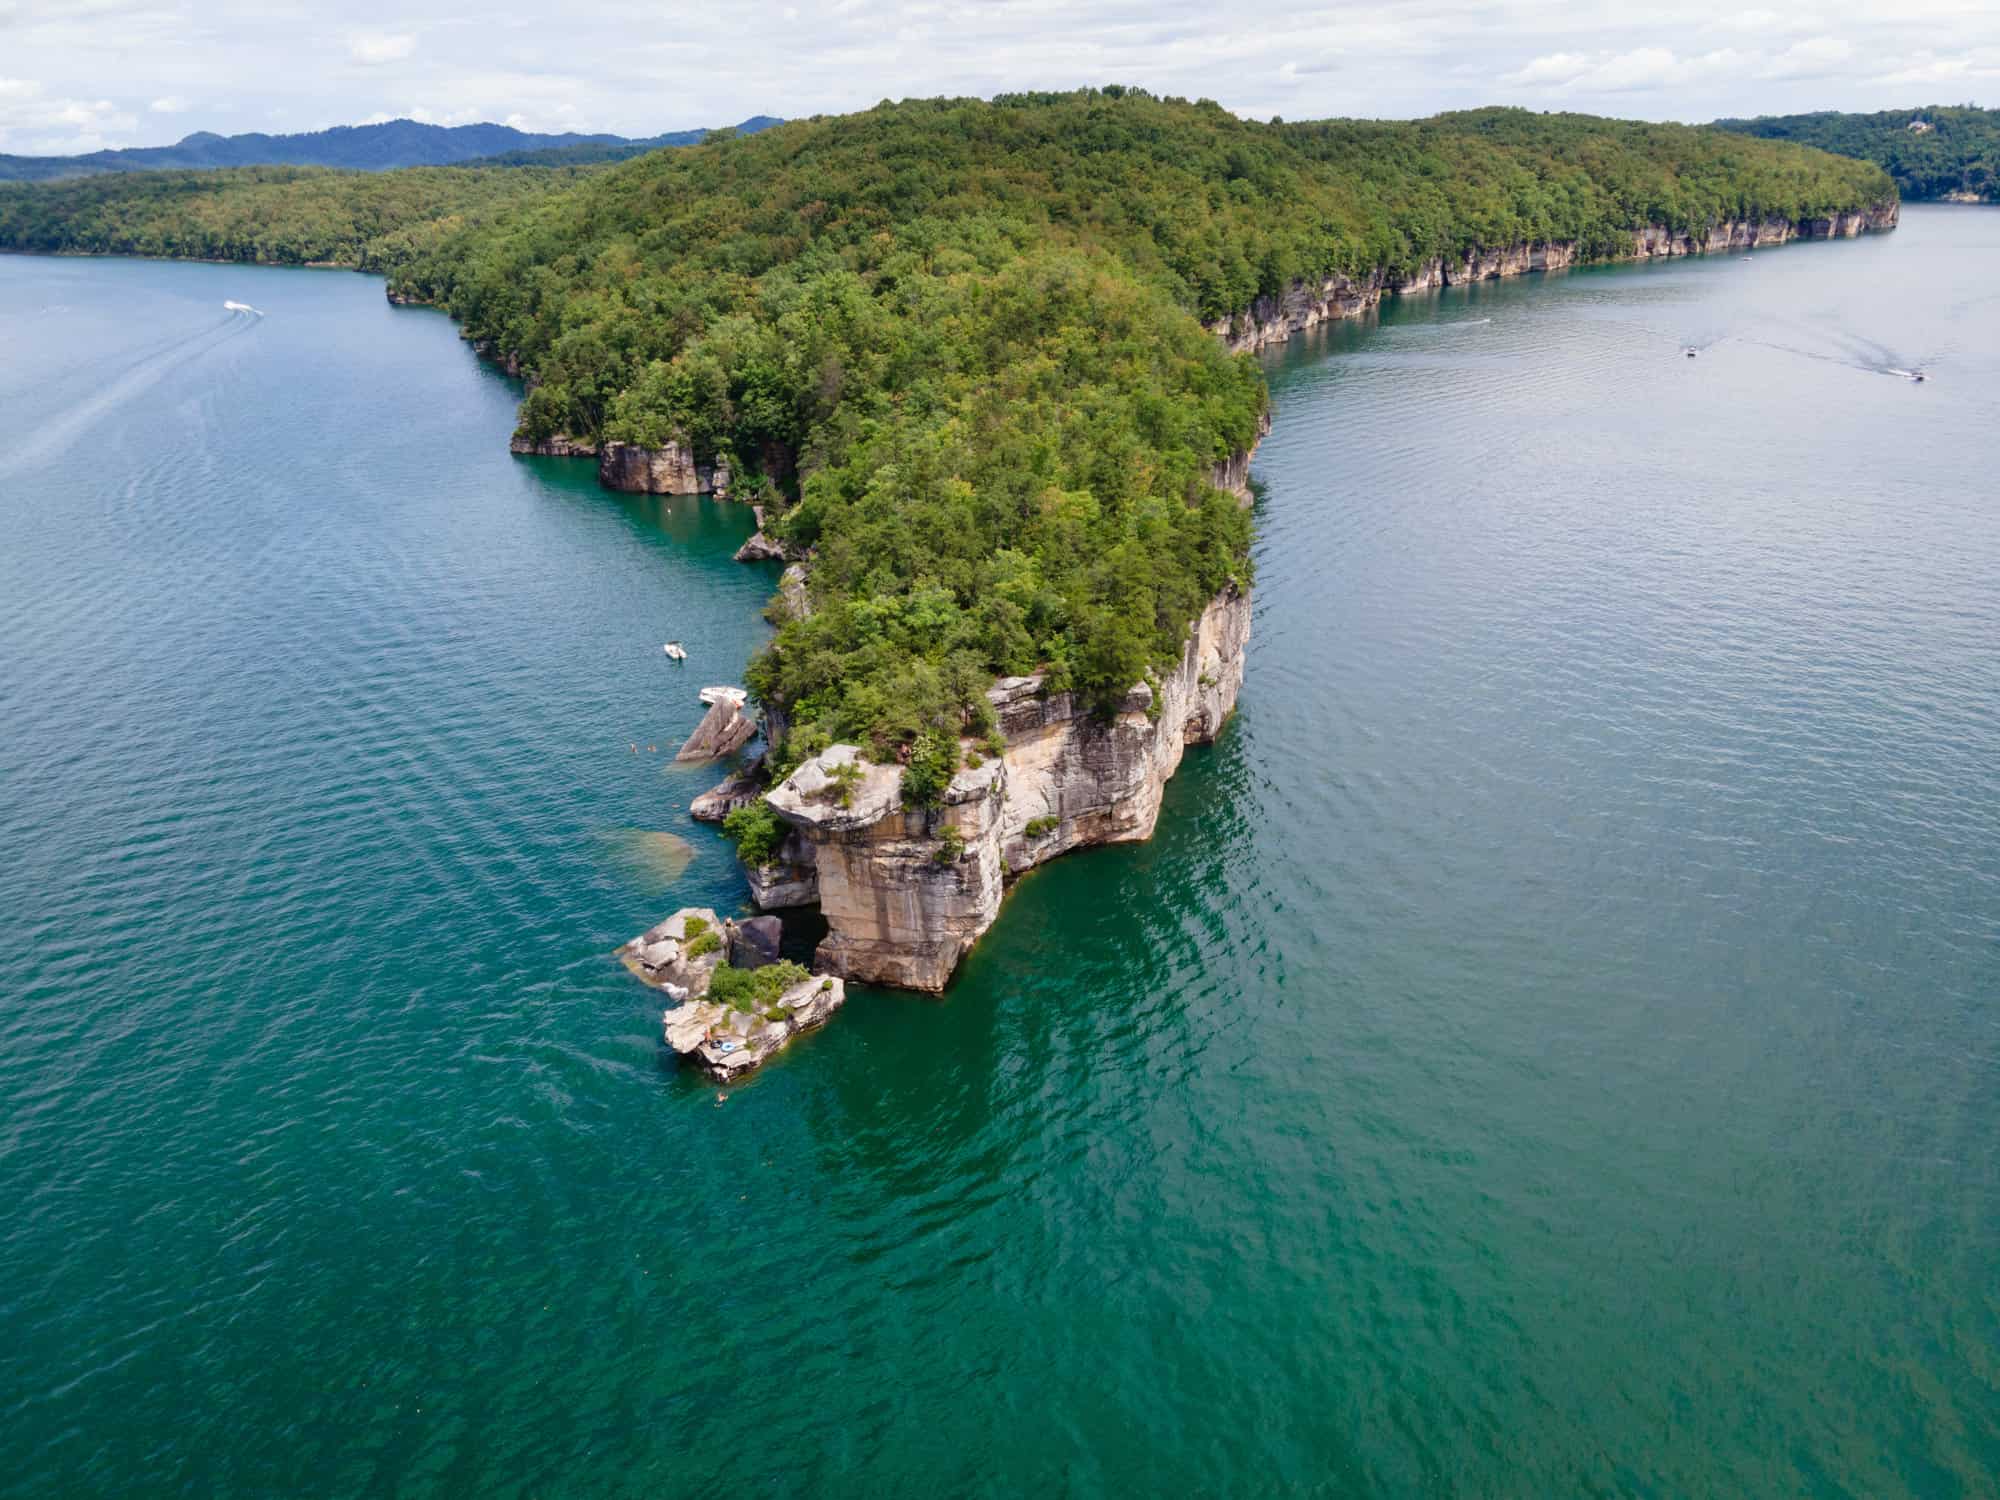 Summersville Lake, West Virginia